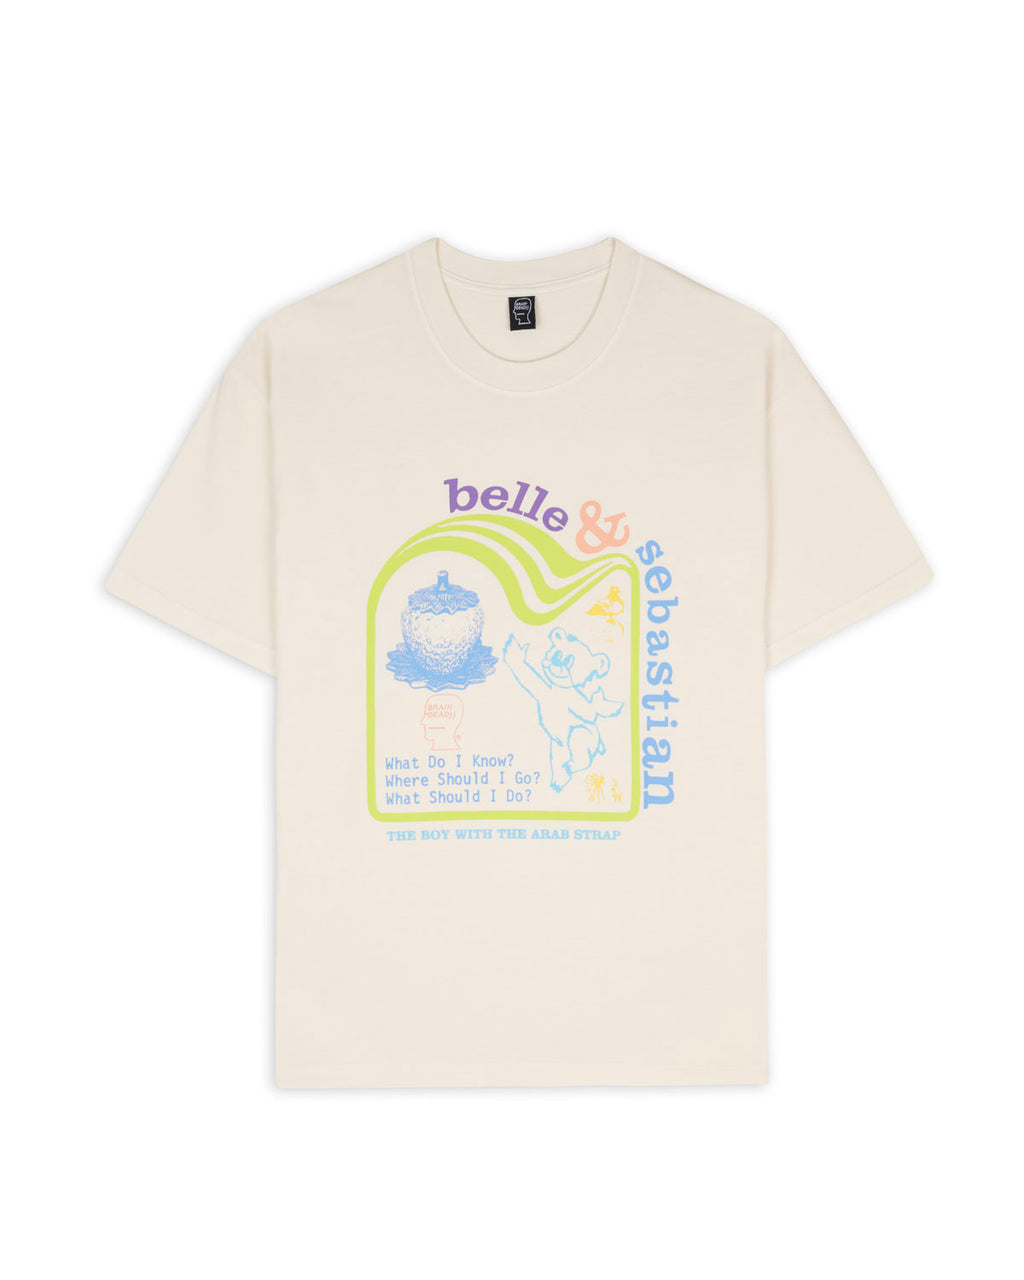 Brain Dead x Belle & Sebastian Boy With The Arab Strap T-Shirt (Tokyo Edition) - Natural